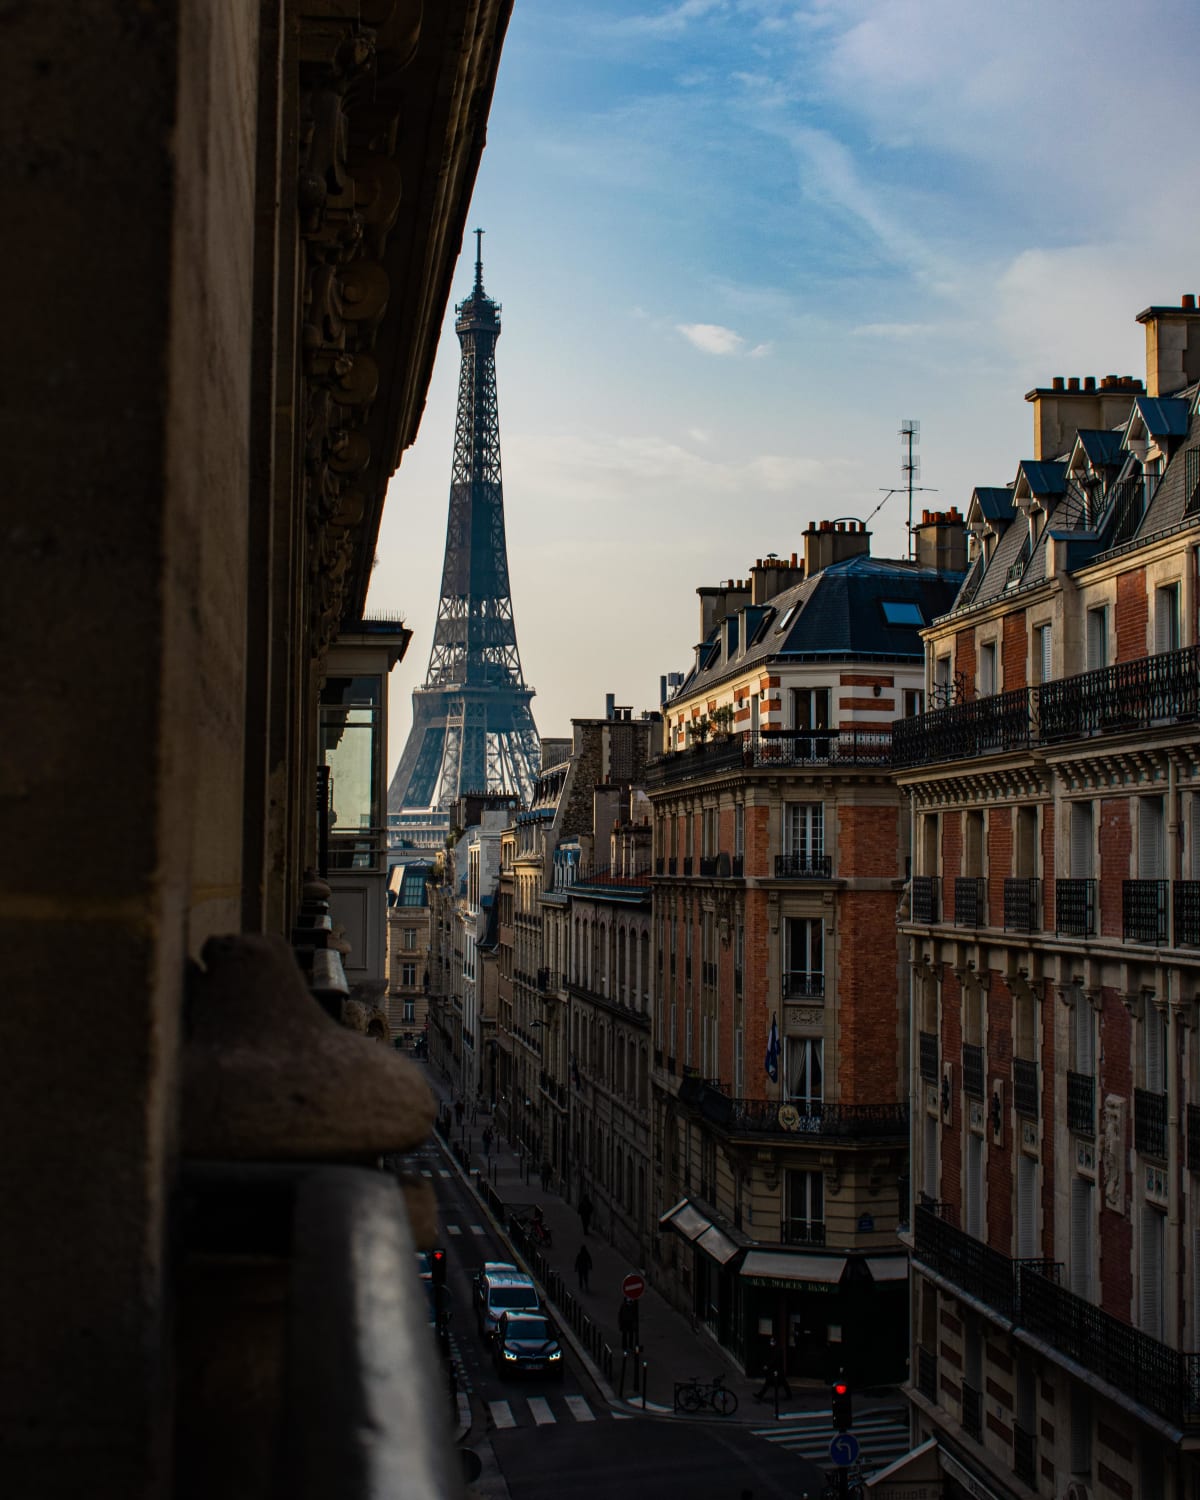 ITAP - Eiffeil Tower in Paris